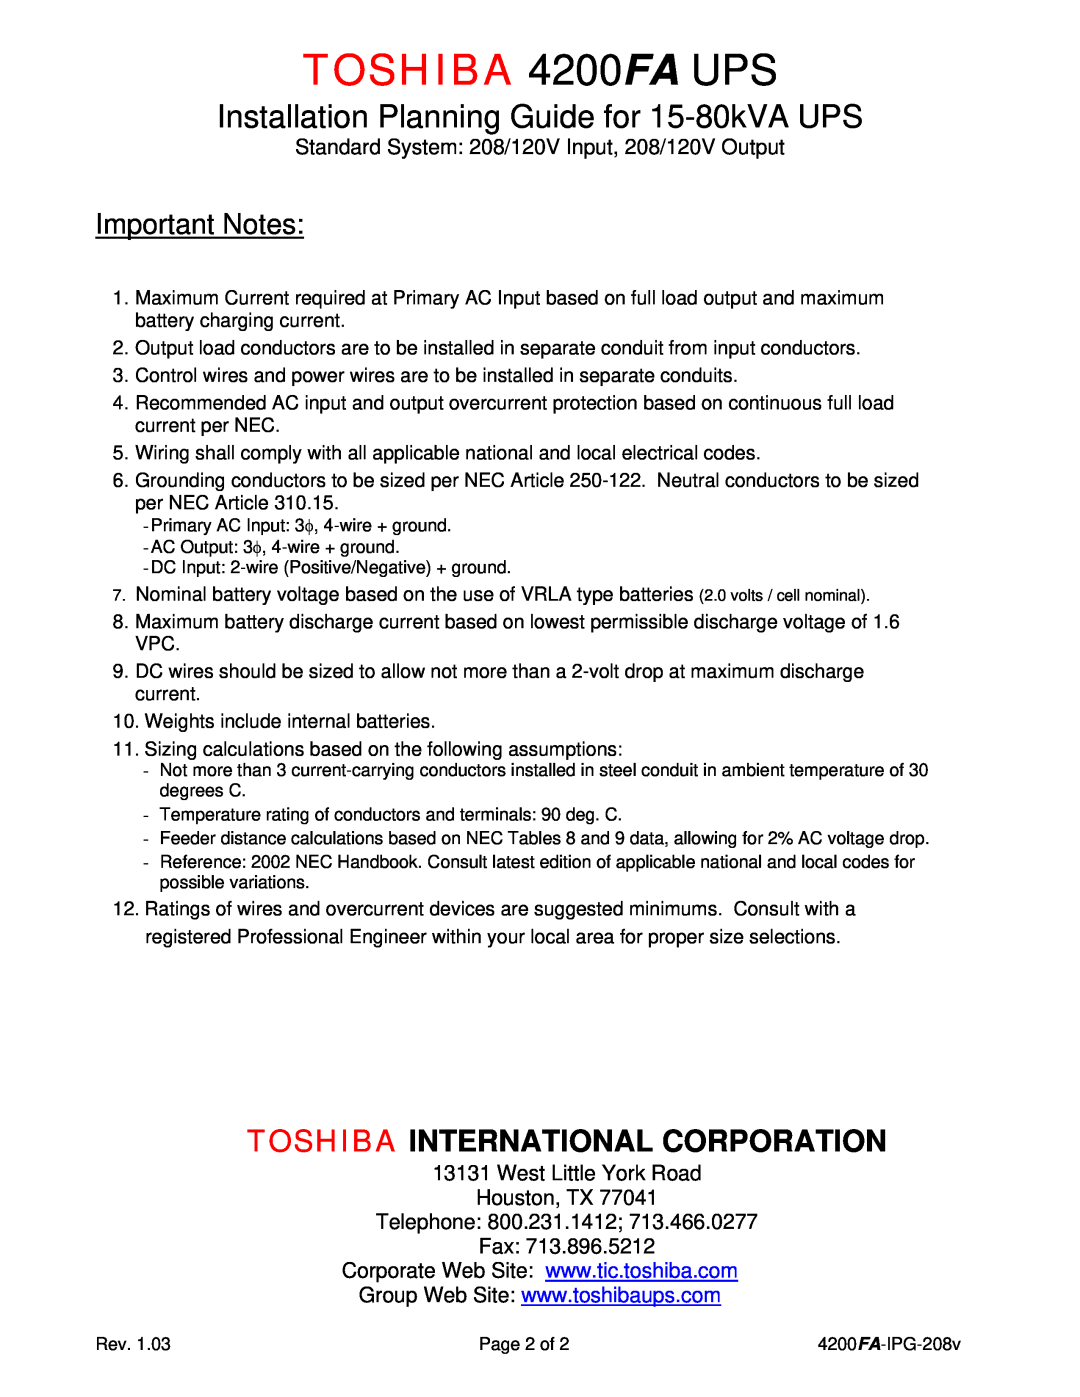 Toshiba 15-80KVA West Little York Road Houston, TX Telephone 800.231.1412 Fax, TOSHIBA 4200FA UPS, Important Notes 